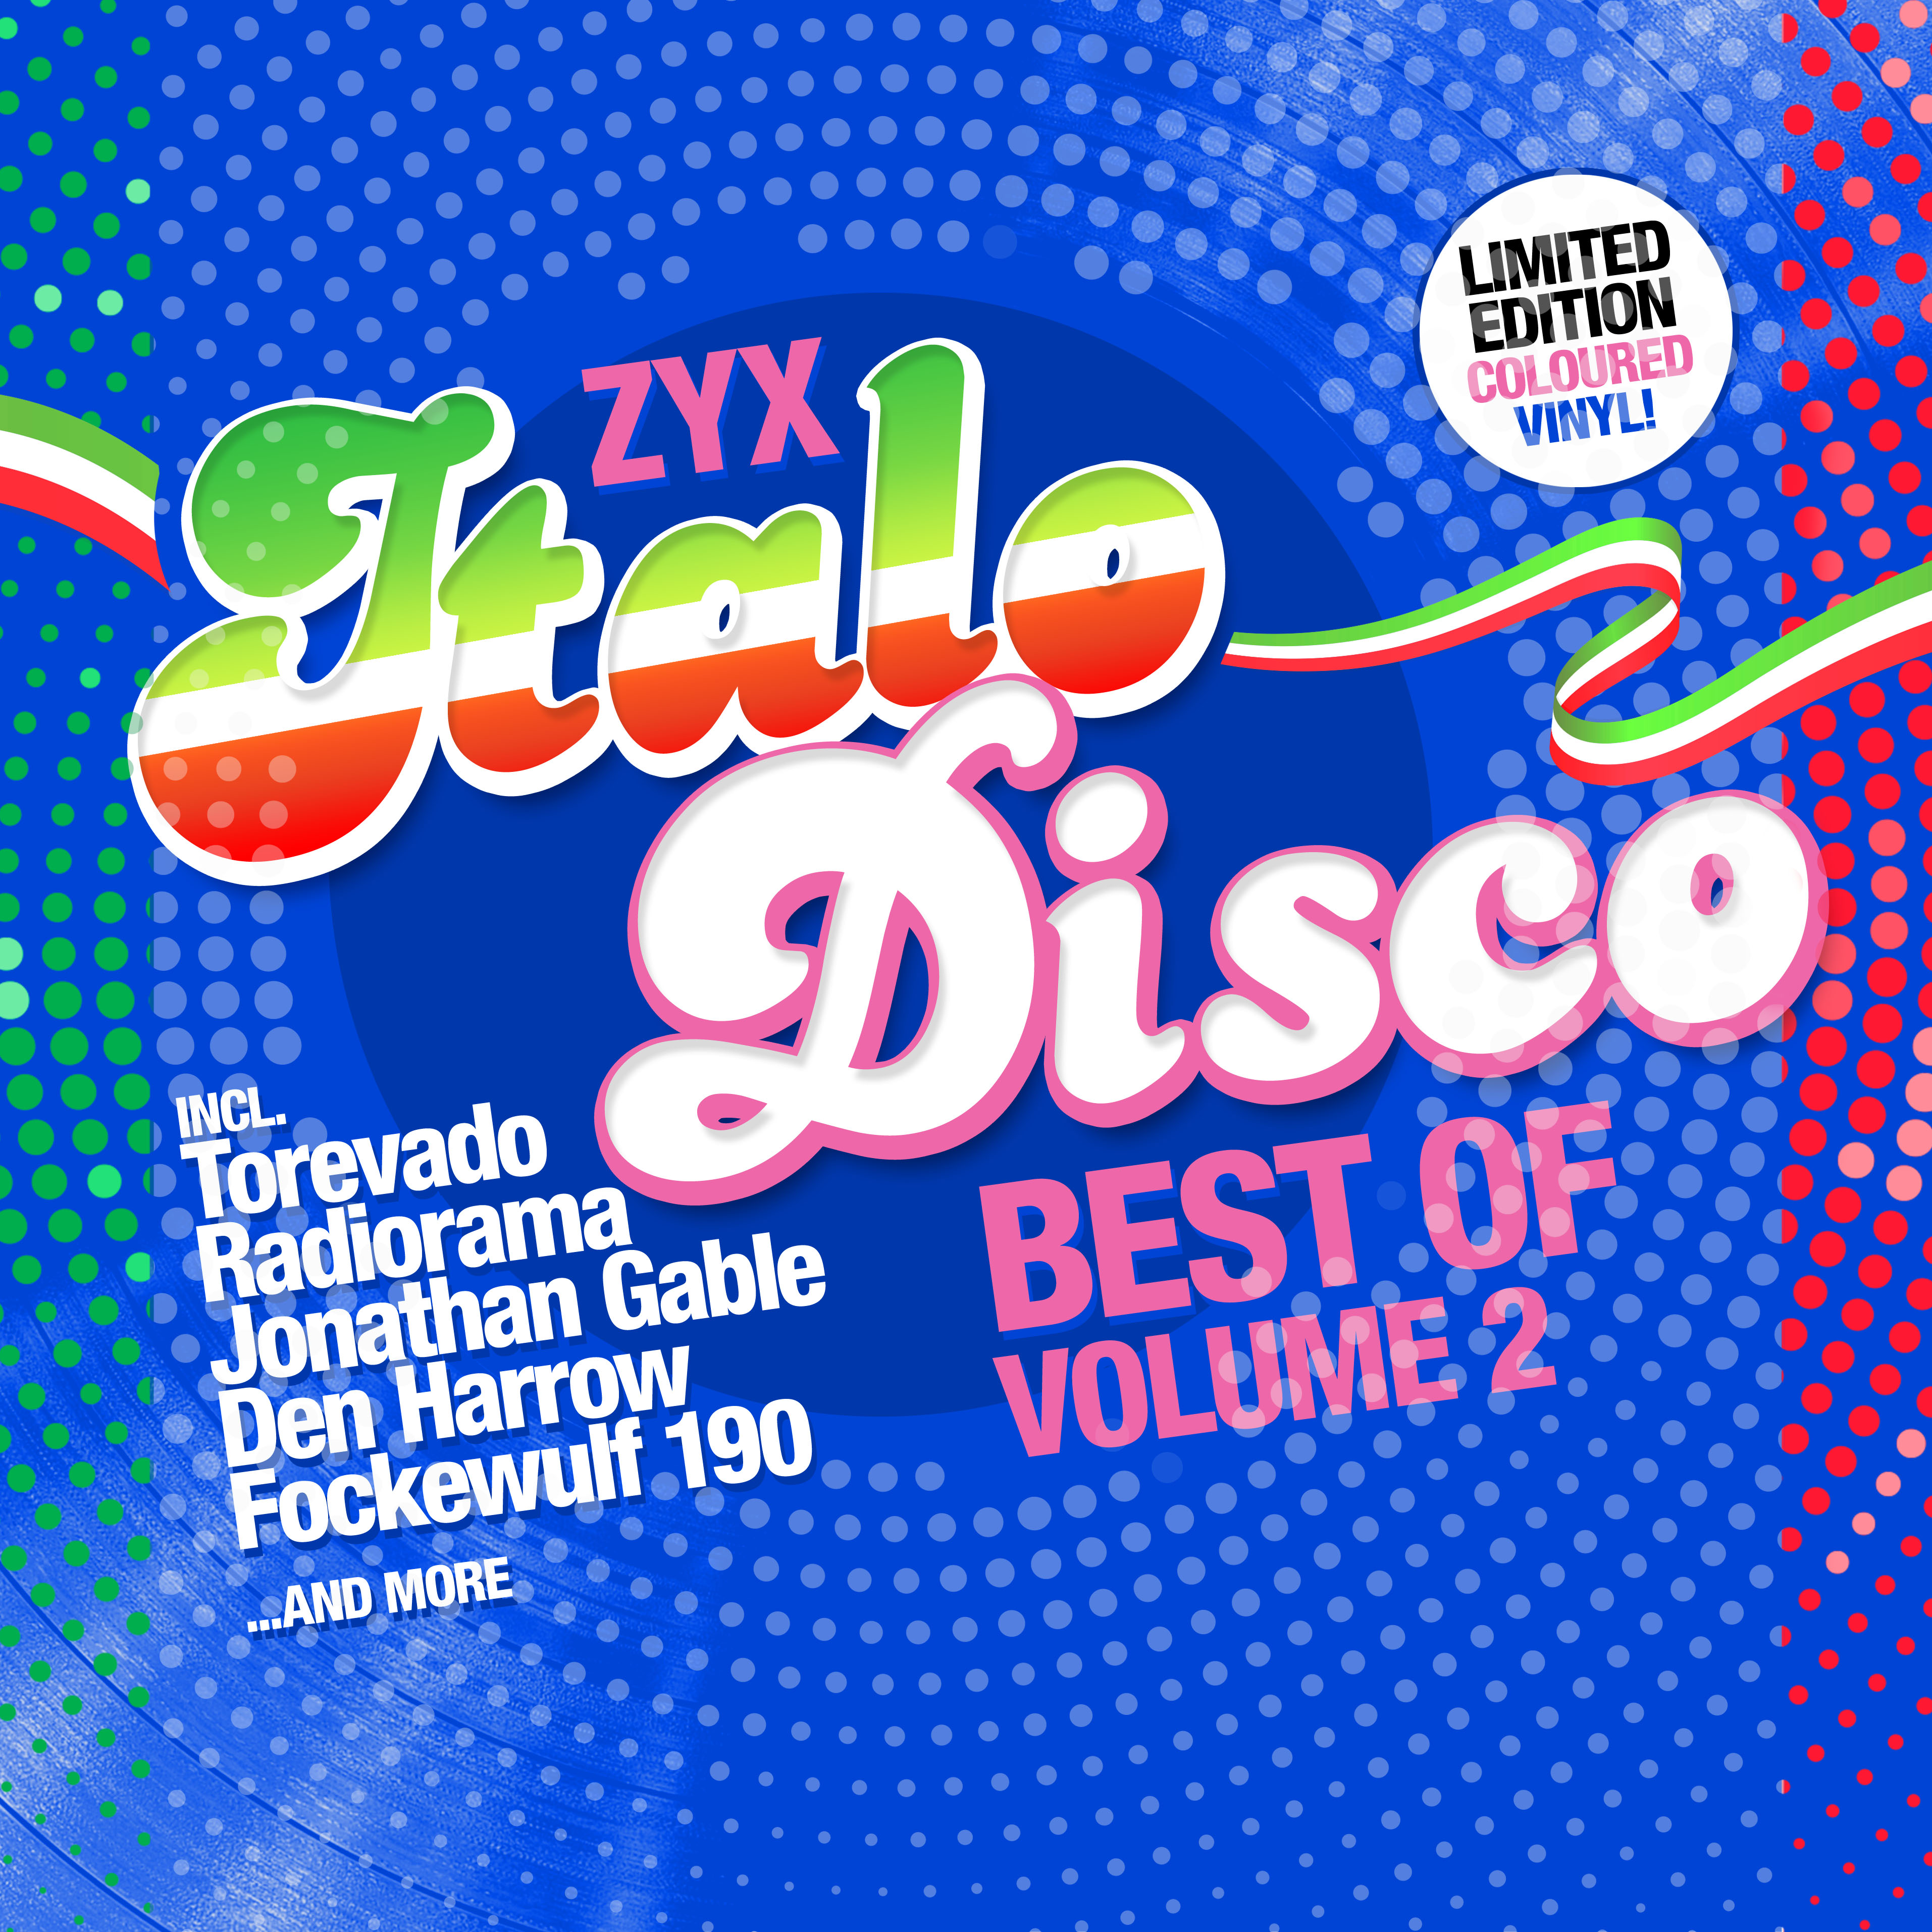 Zyx italo disco new generation vol 24. ZYX Italo Disco - best of Volume 2. ZYX Italo Disco New Generation. ZYX Italo Disco Hits. Disco Vinyl.